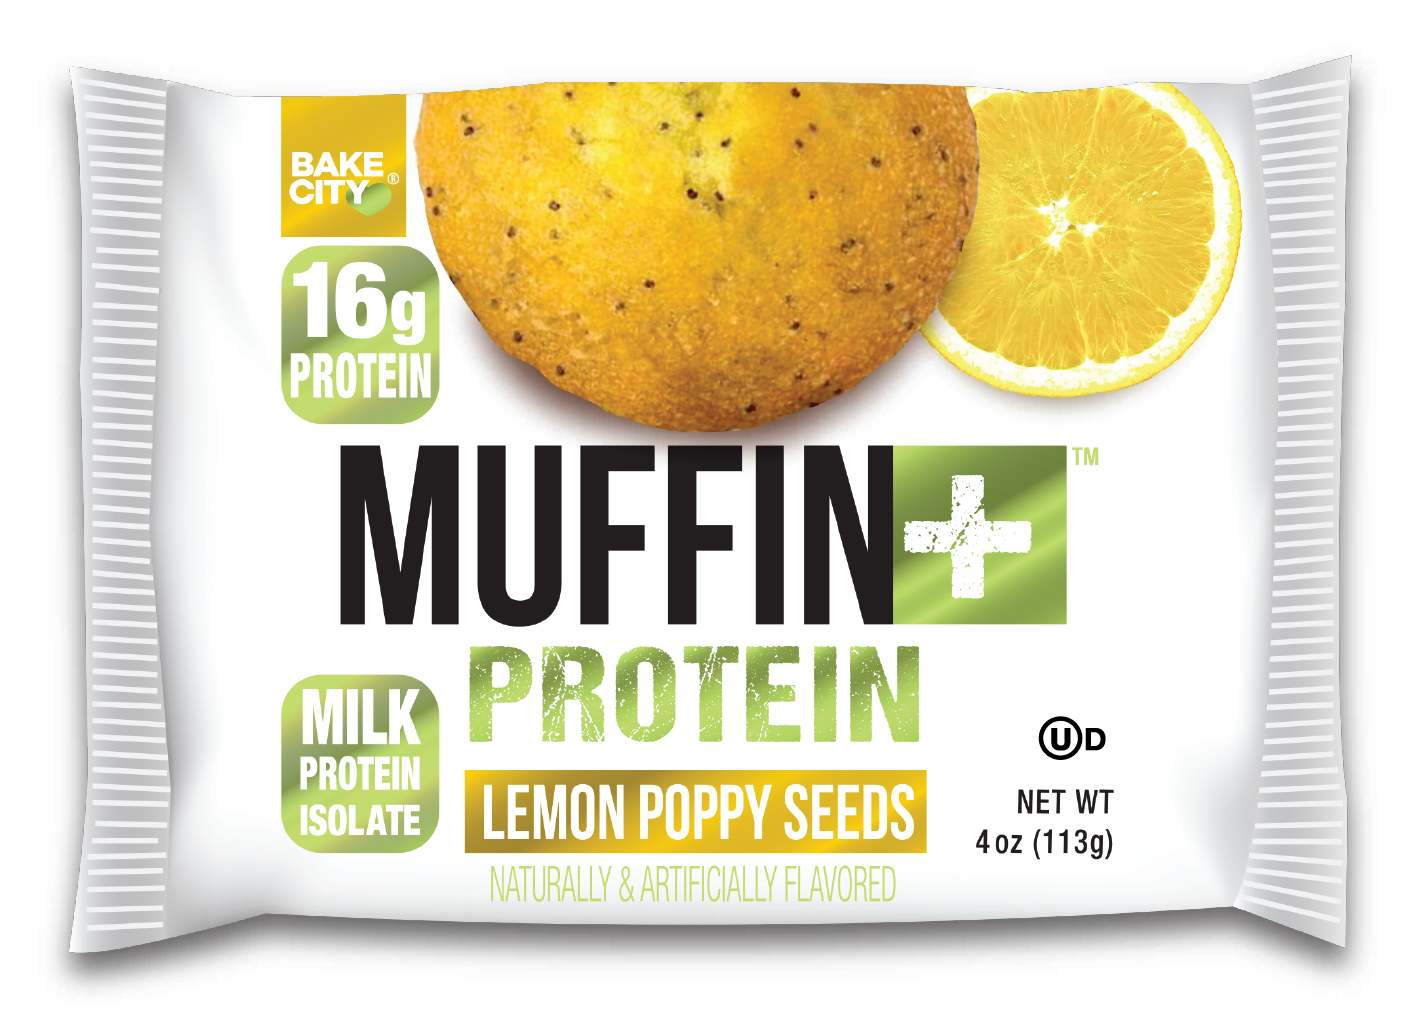 Muffin+ Protein Lemon Poppy Seeds - Cookie+ Protein